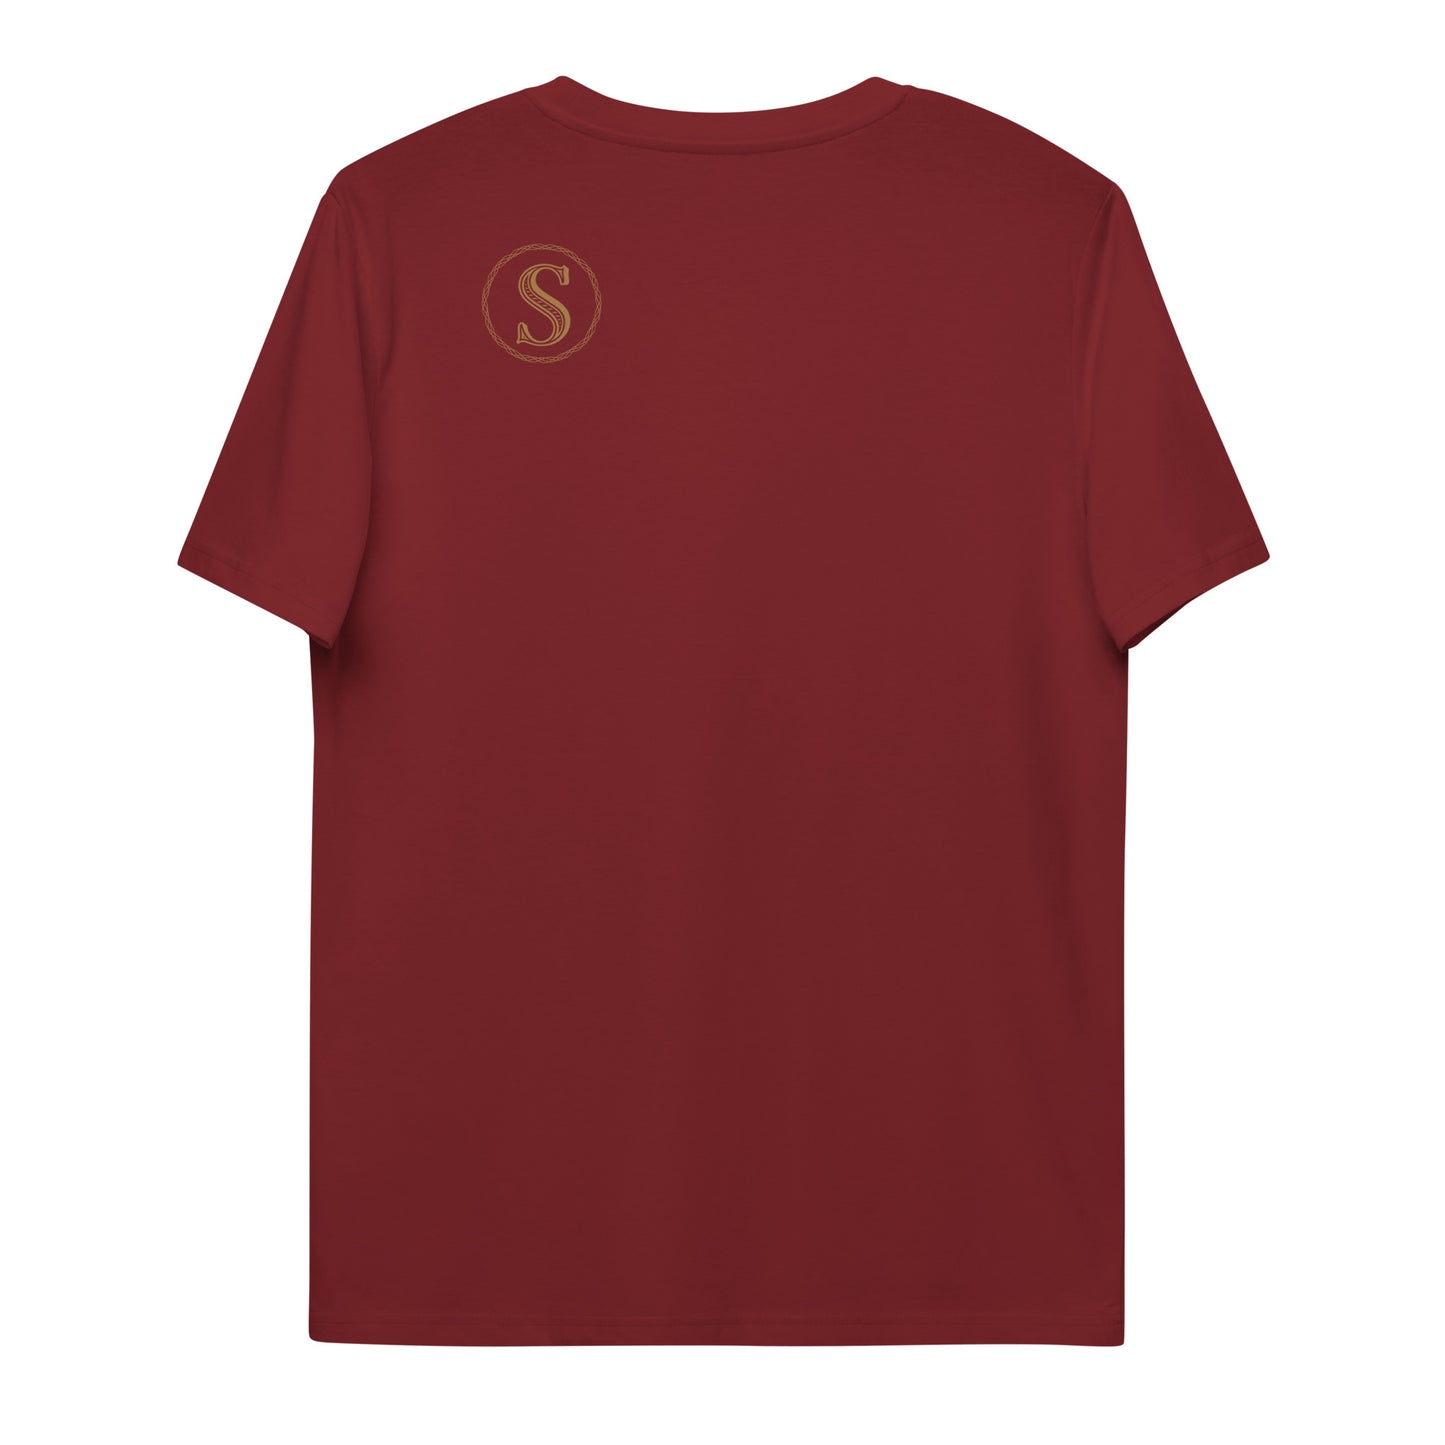 Shmoki cotton t-shirt V23